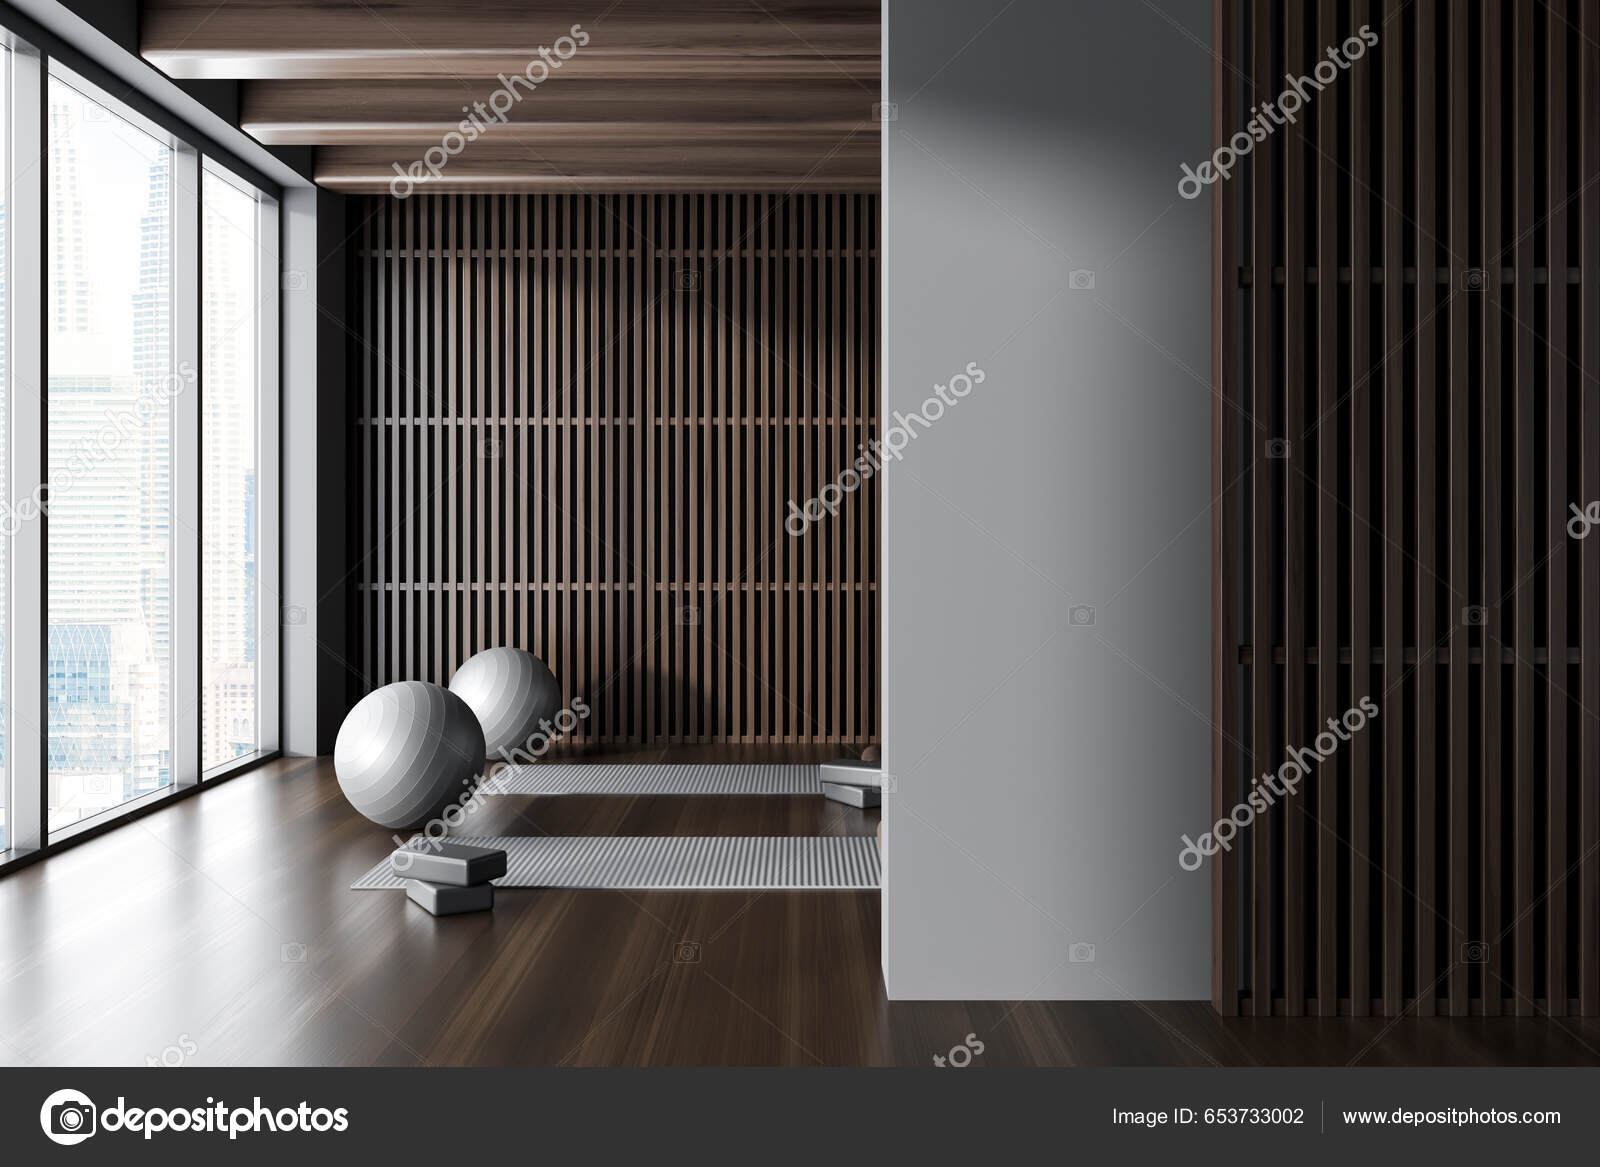 https://st5.depositphotos.com/2673929/65373/i/1600/depositphotos_653733002-stock-photo-interior-modern-yoga-studio-gray.jpg